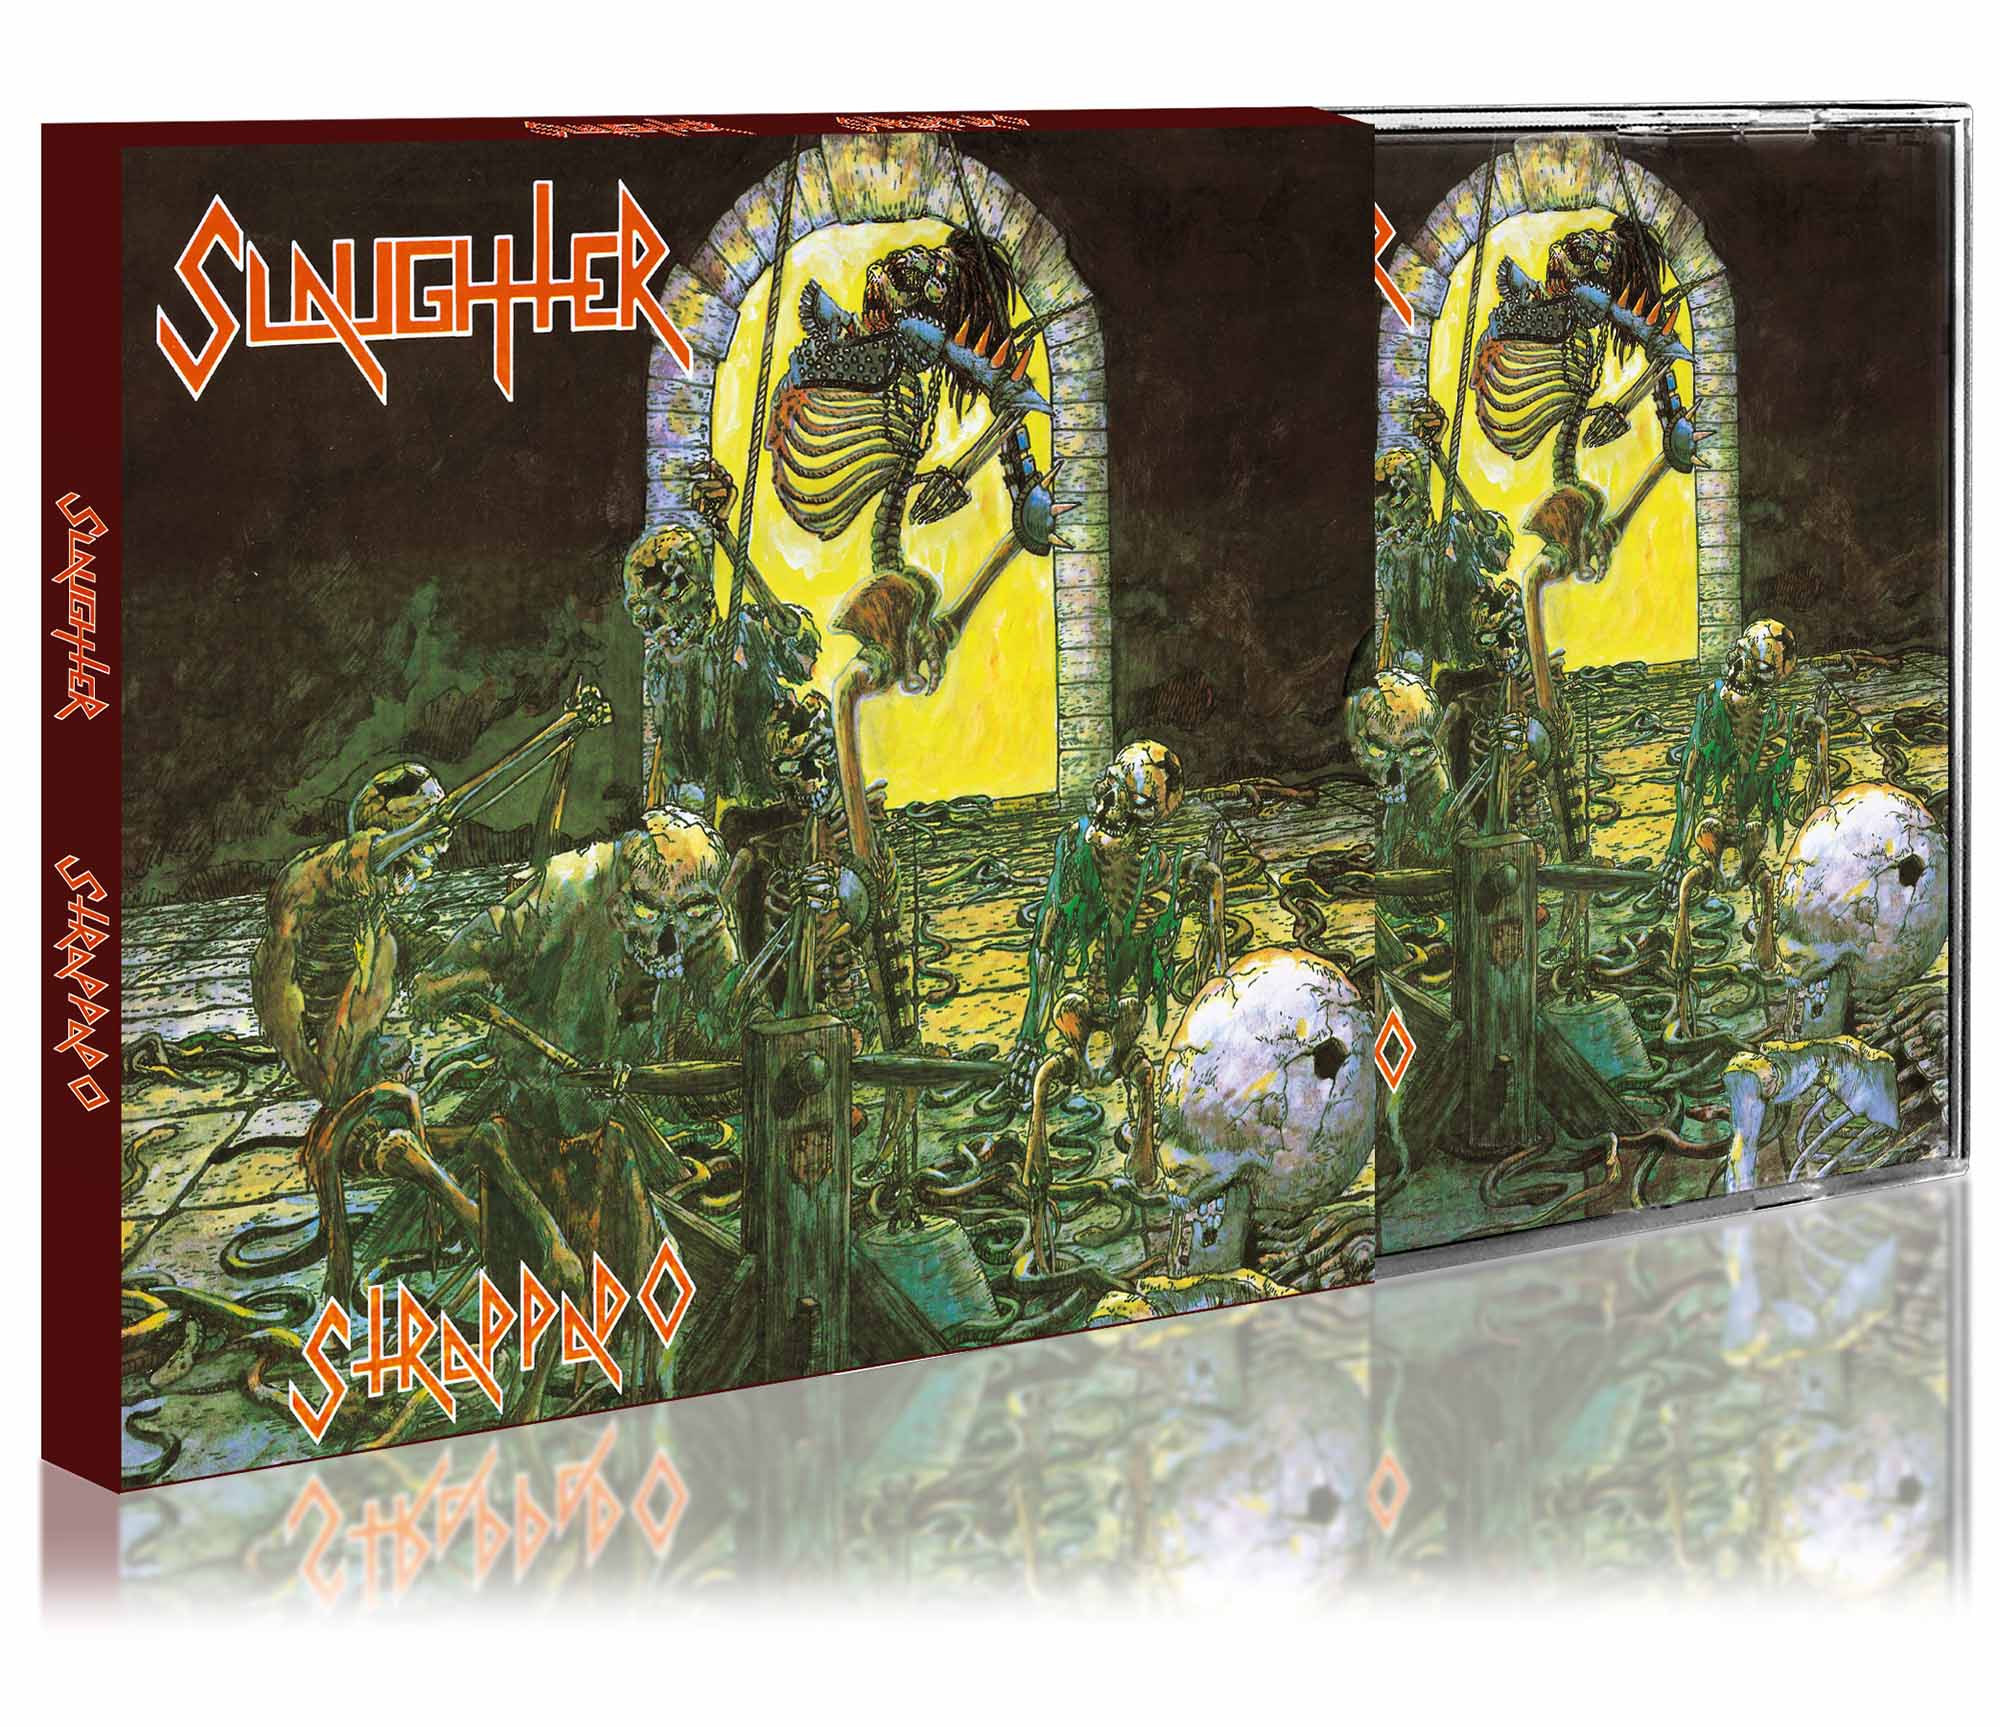 SLAUGHTER - Strappado  CD  REMIX